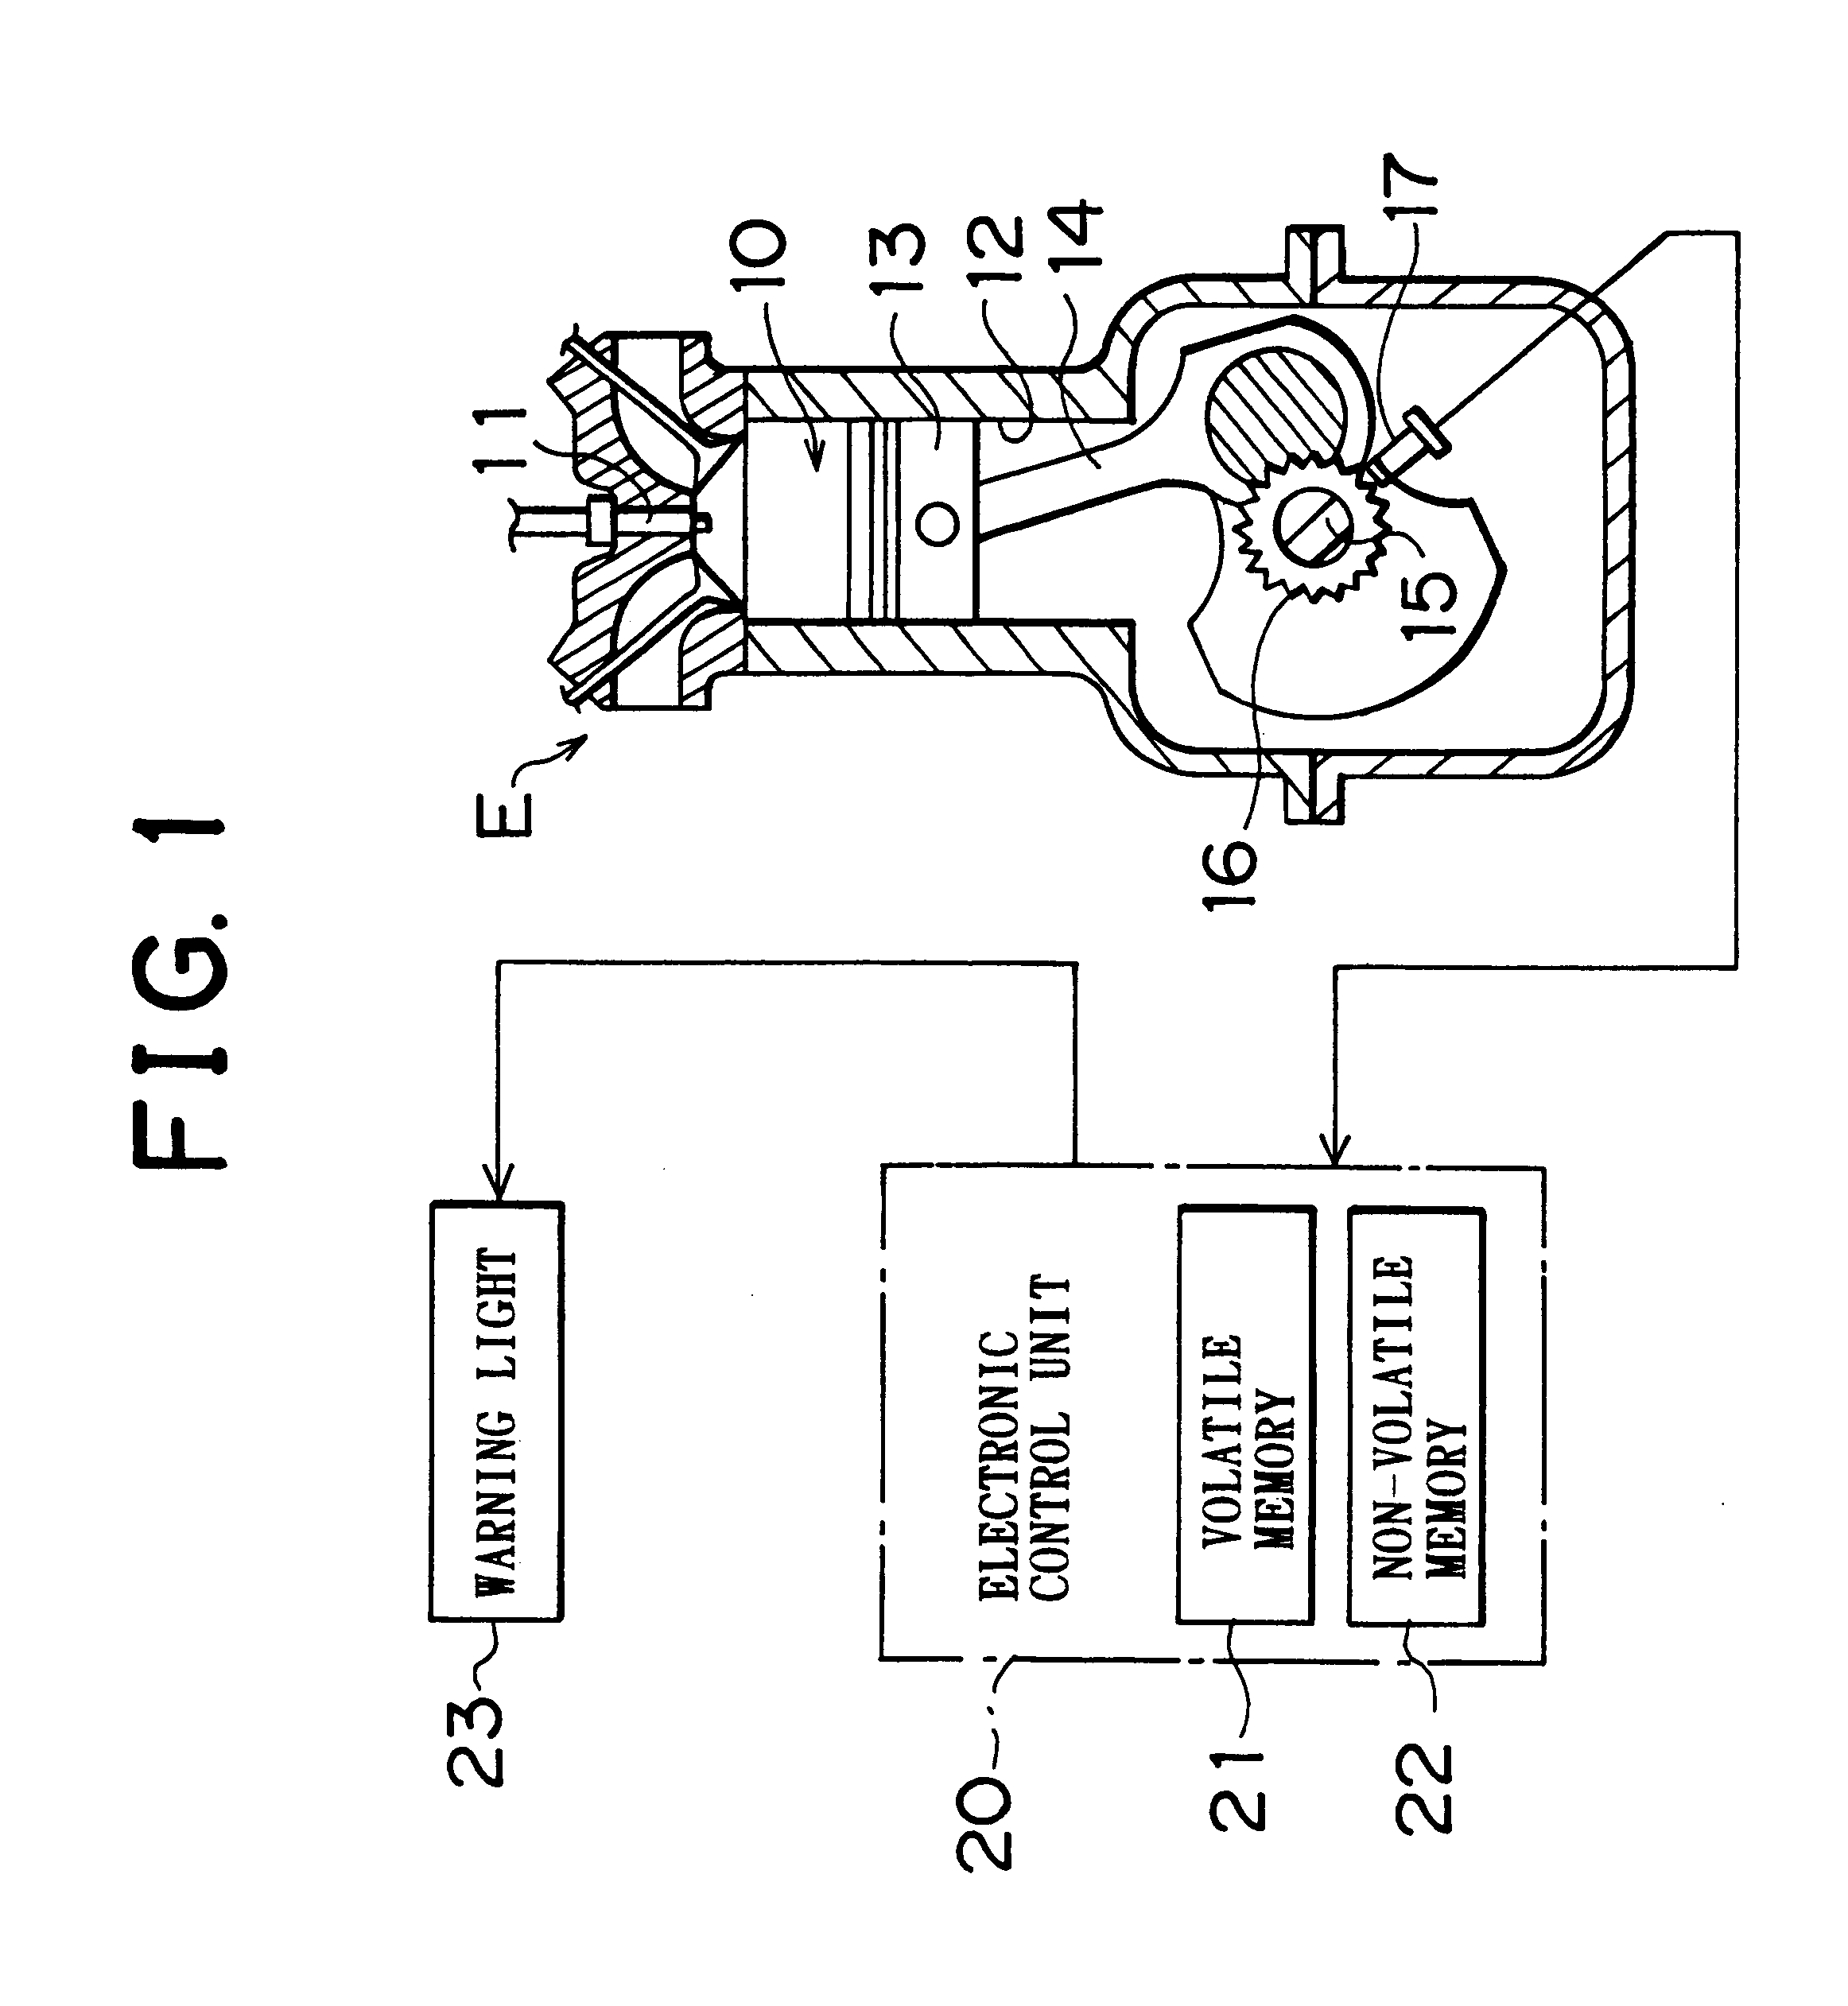 Internal combustion engine diagnostic apparatus